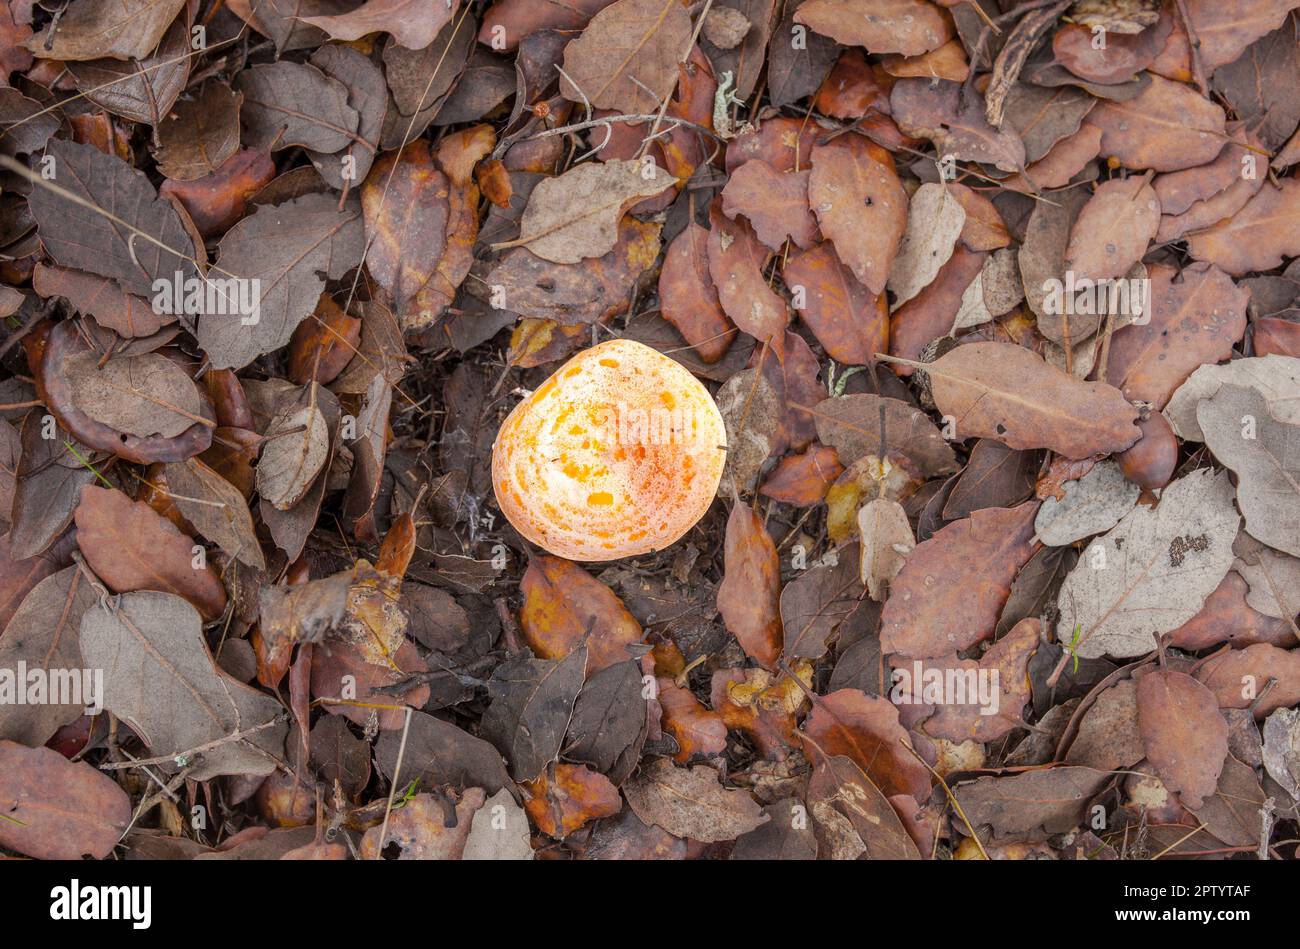 Saffron milk cap or lactarius deliciosus. Mushroom sprouting on a bed of fallen leaves Stock Photo